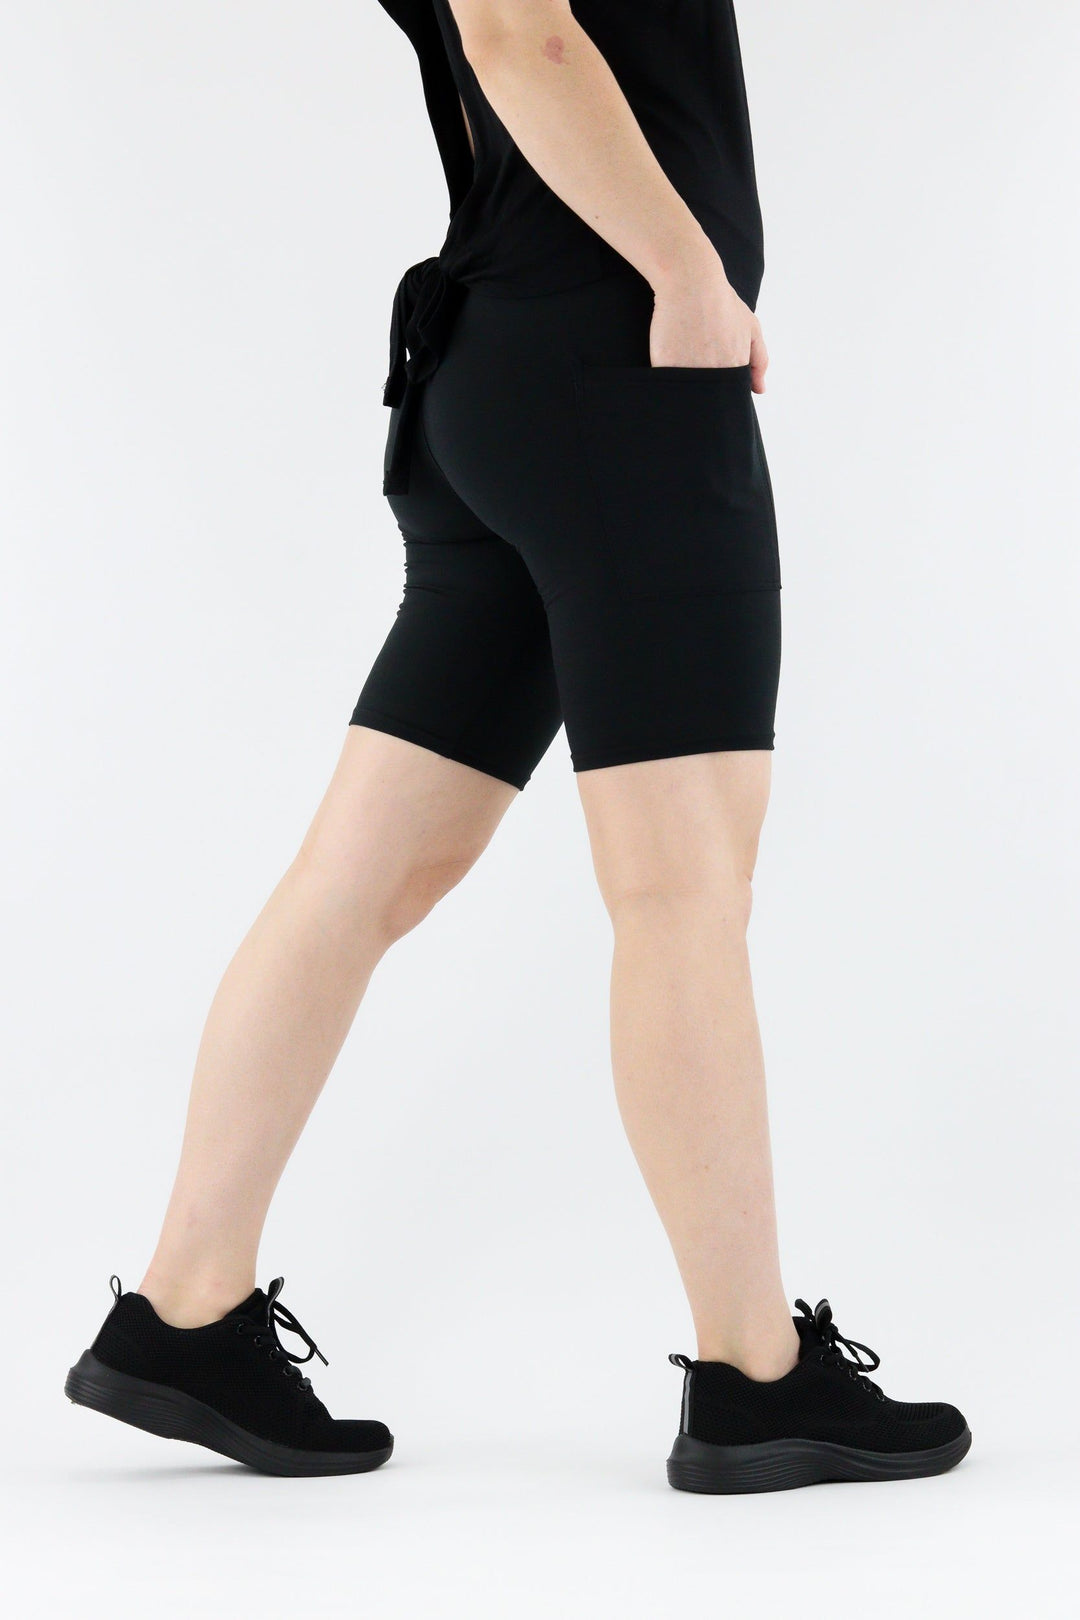 Women's Casual Butterfly Biker Shorts Black Capris Plus Size Leggings 1XL  (14)